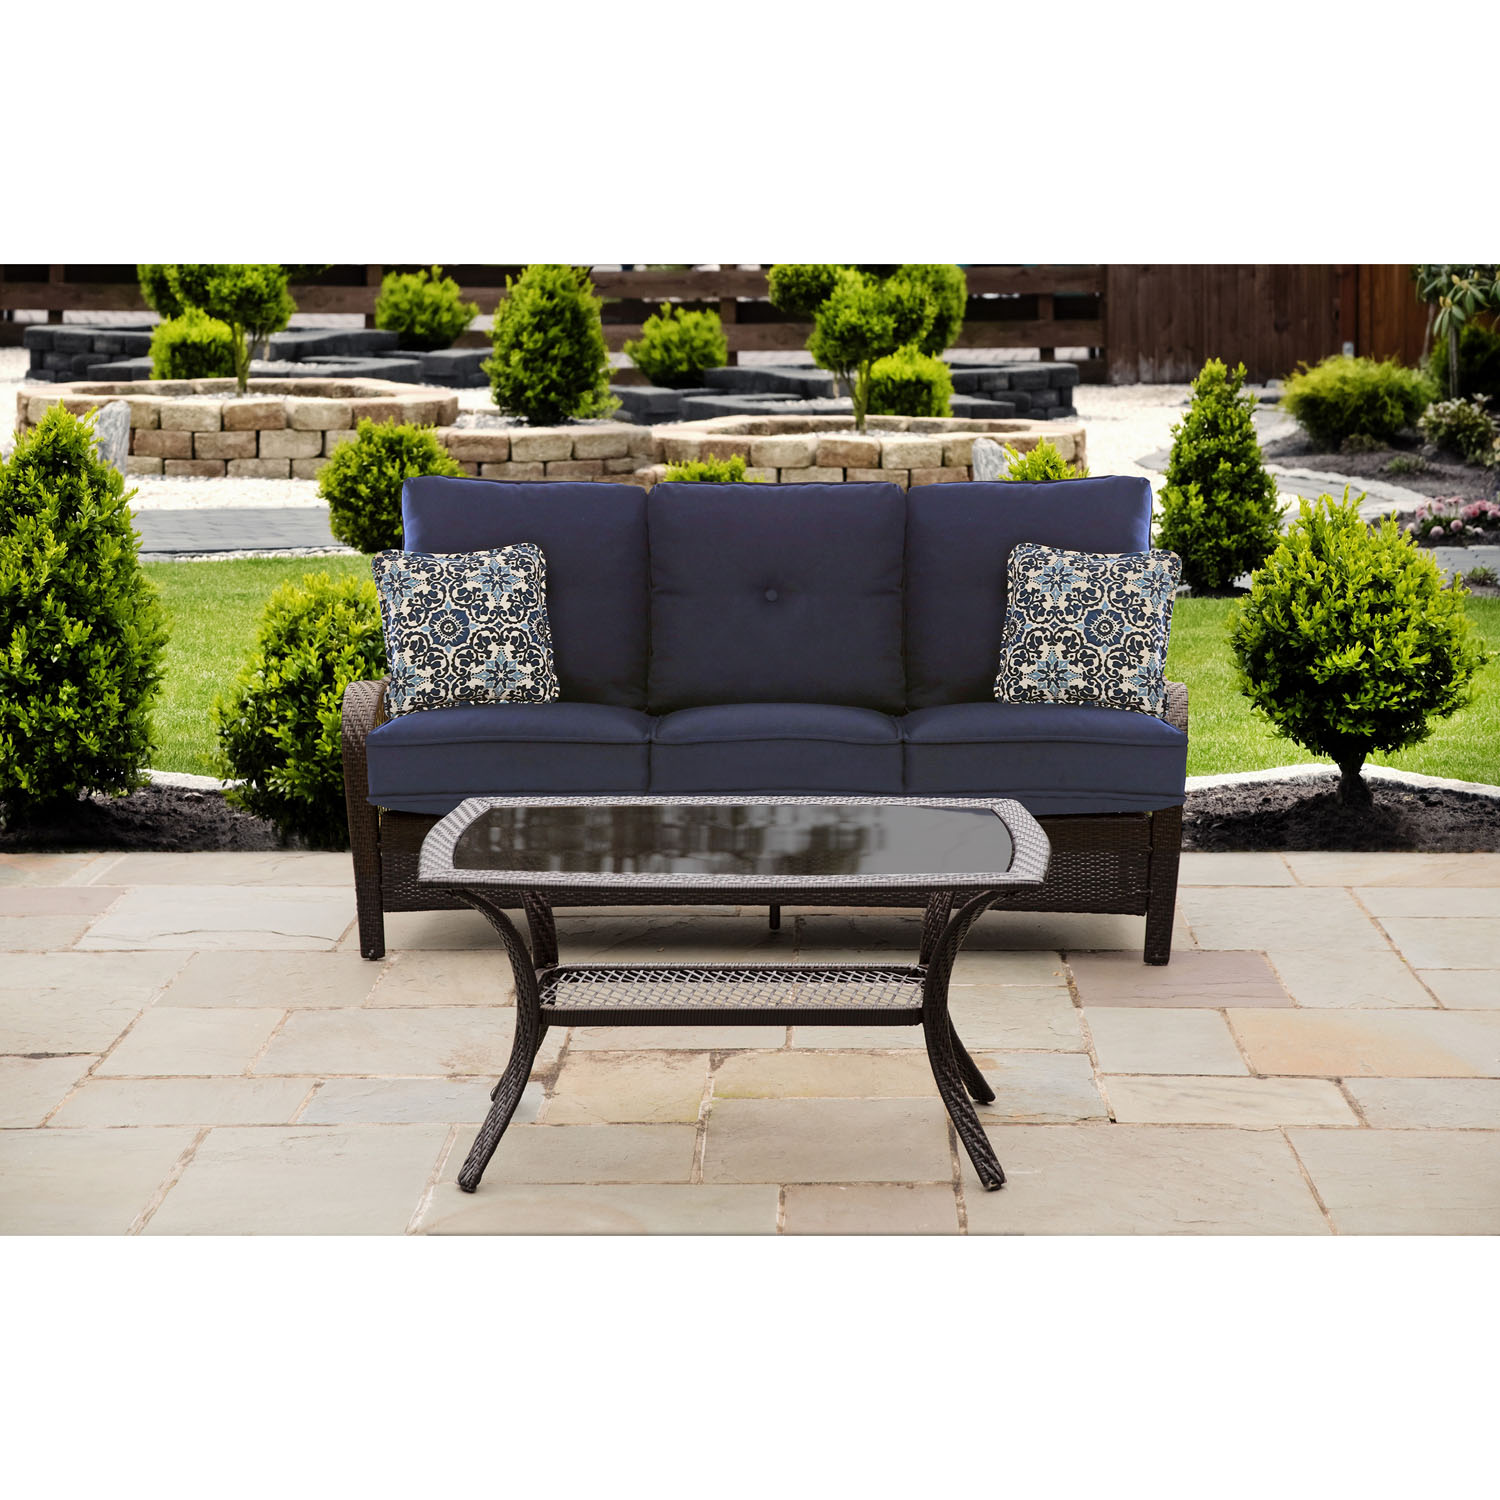 Hanover Orleans 2-Piece Wicker Outdoor Patio Sofa Set, Navy Blue - image 4 of 5